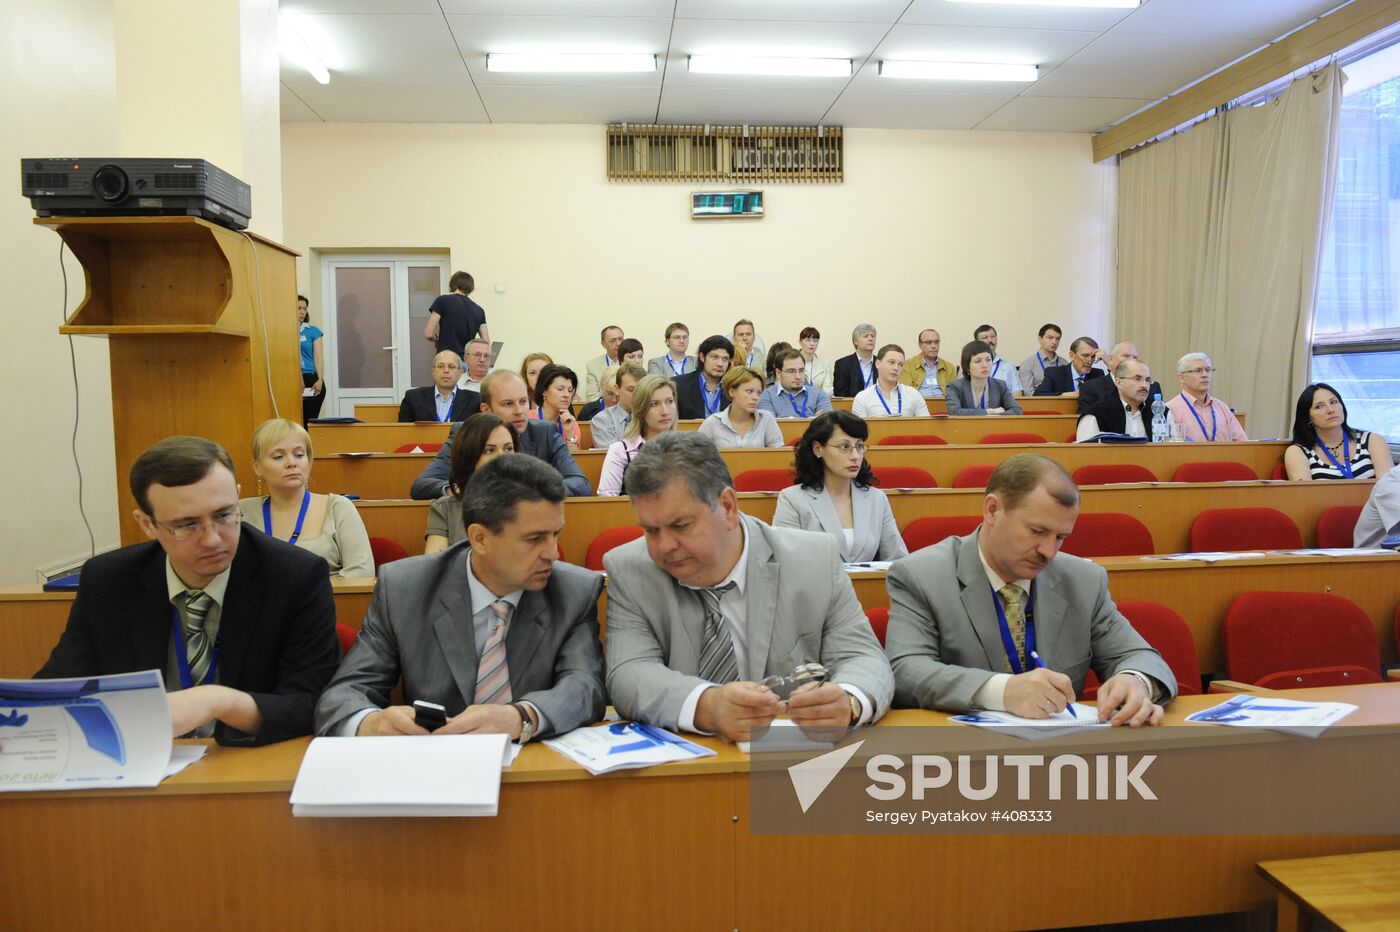 The Golitsyno training and methodological center